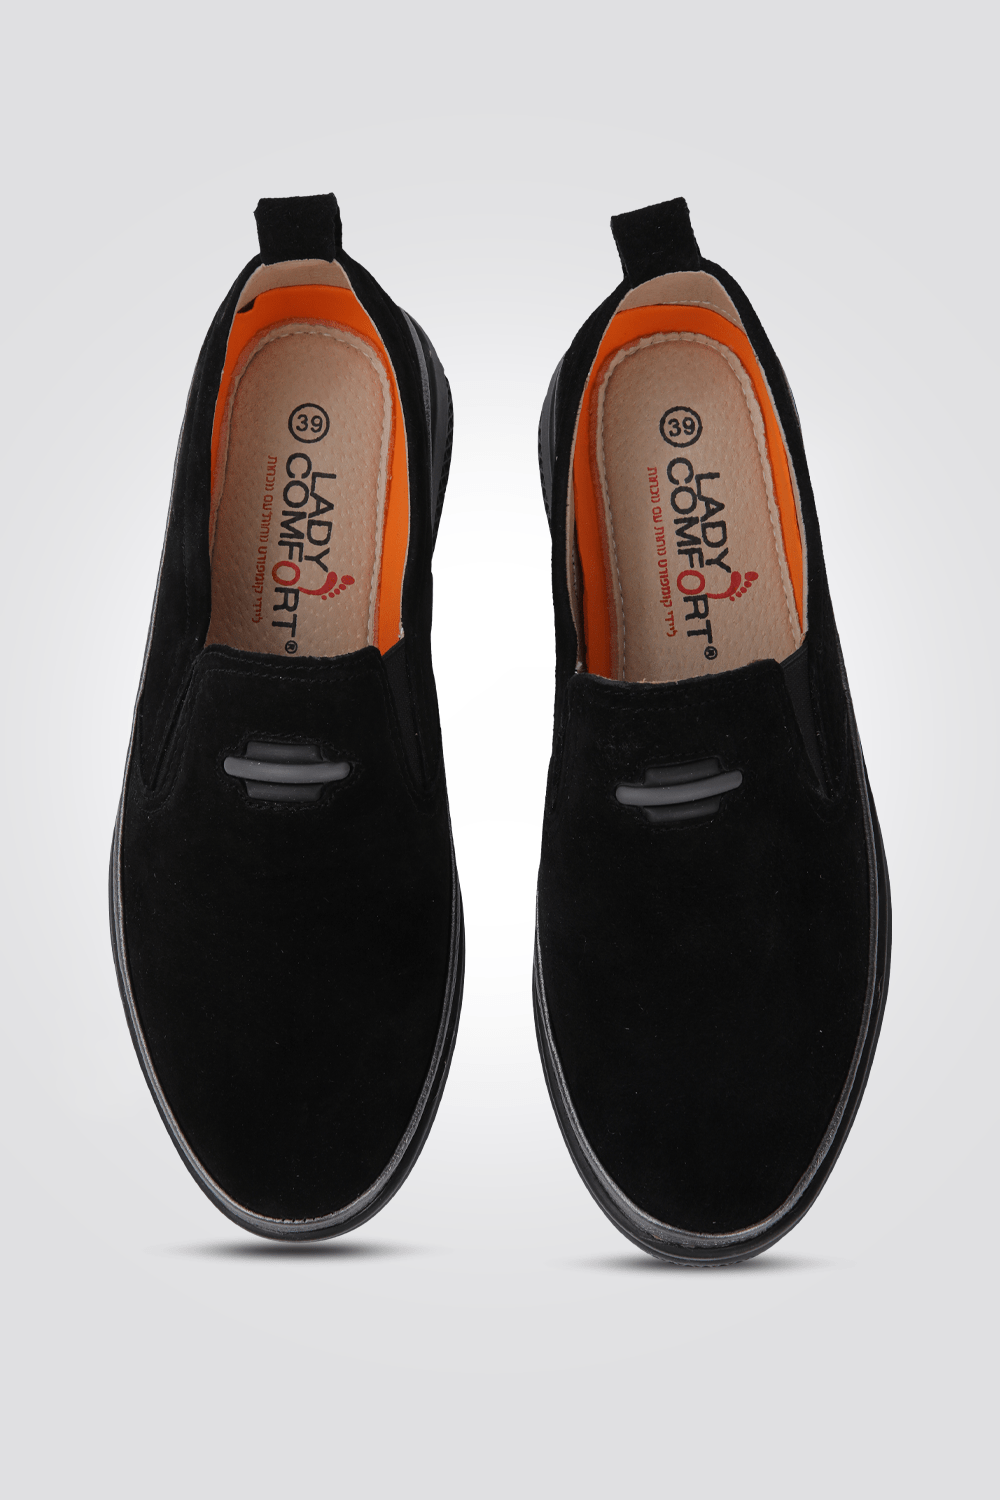 LADY COMFORT - נעל נוחות לנשים בצבע שחור זמש - MASHBIR//365